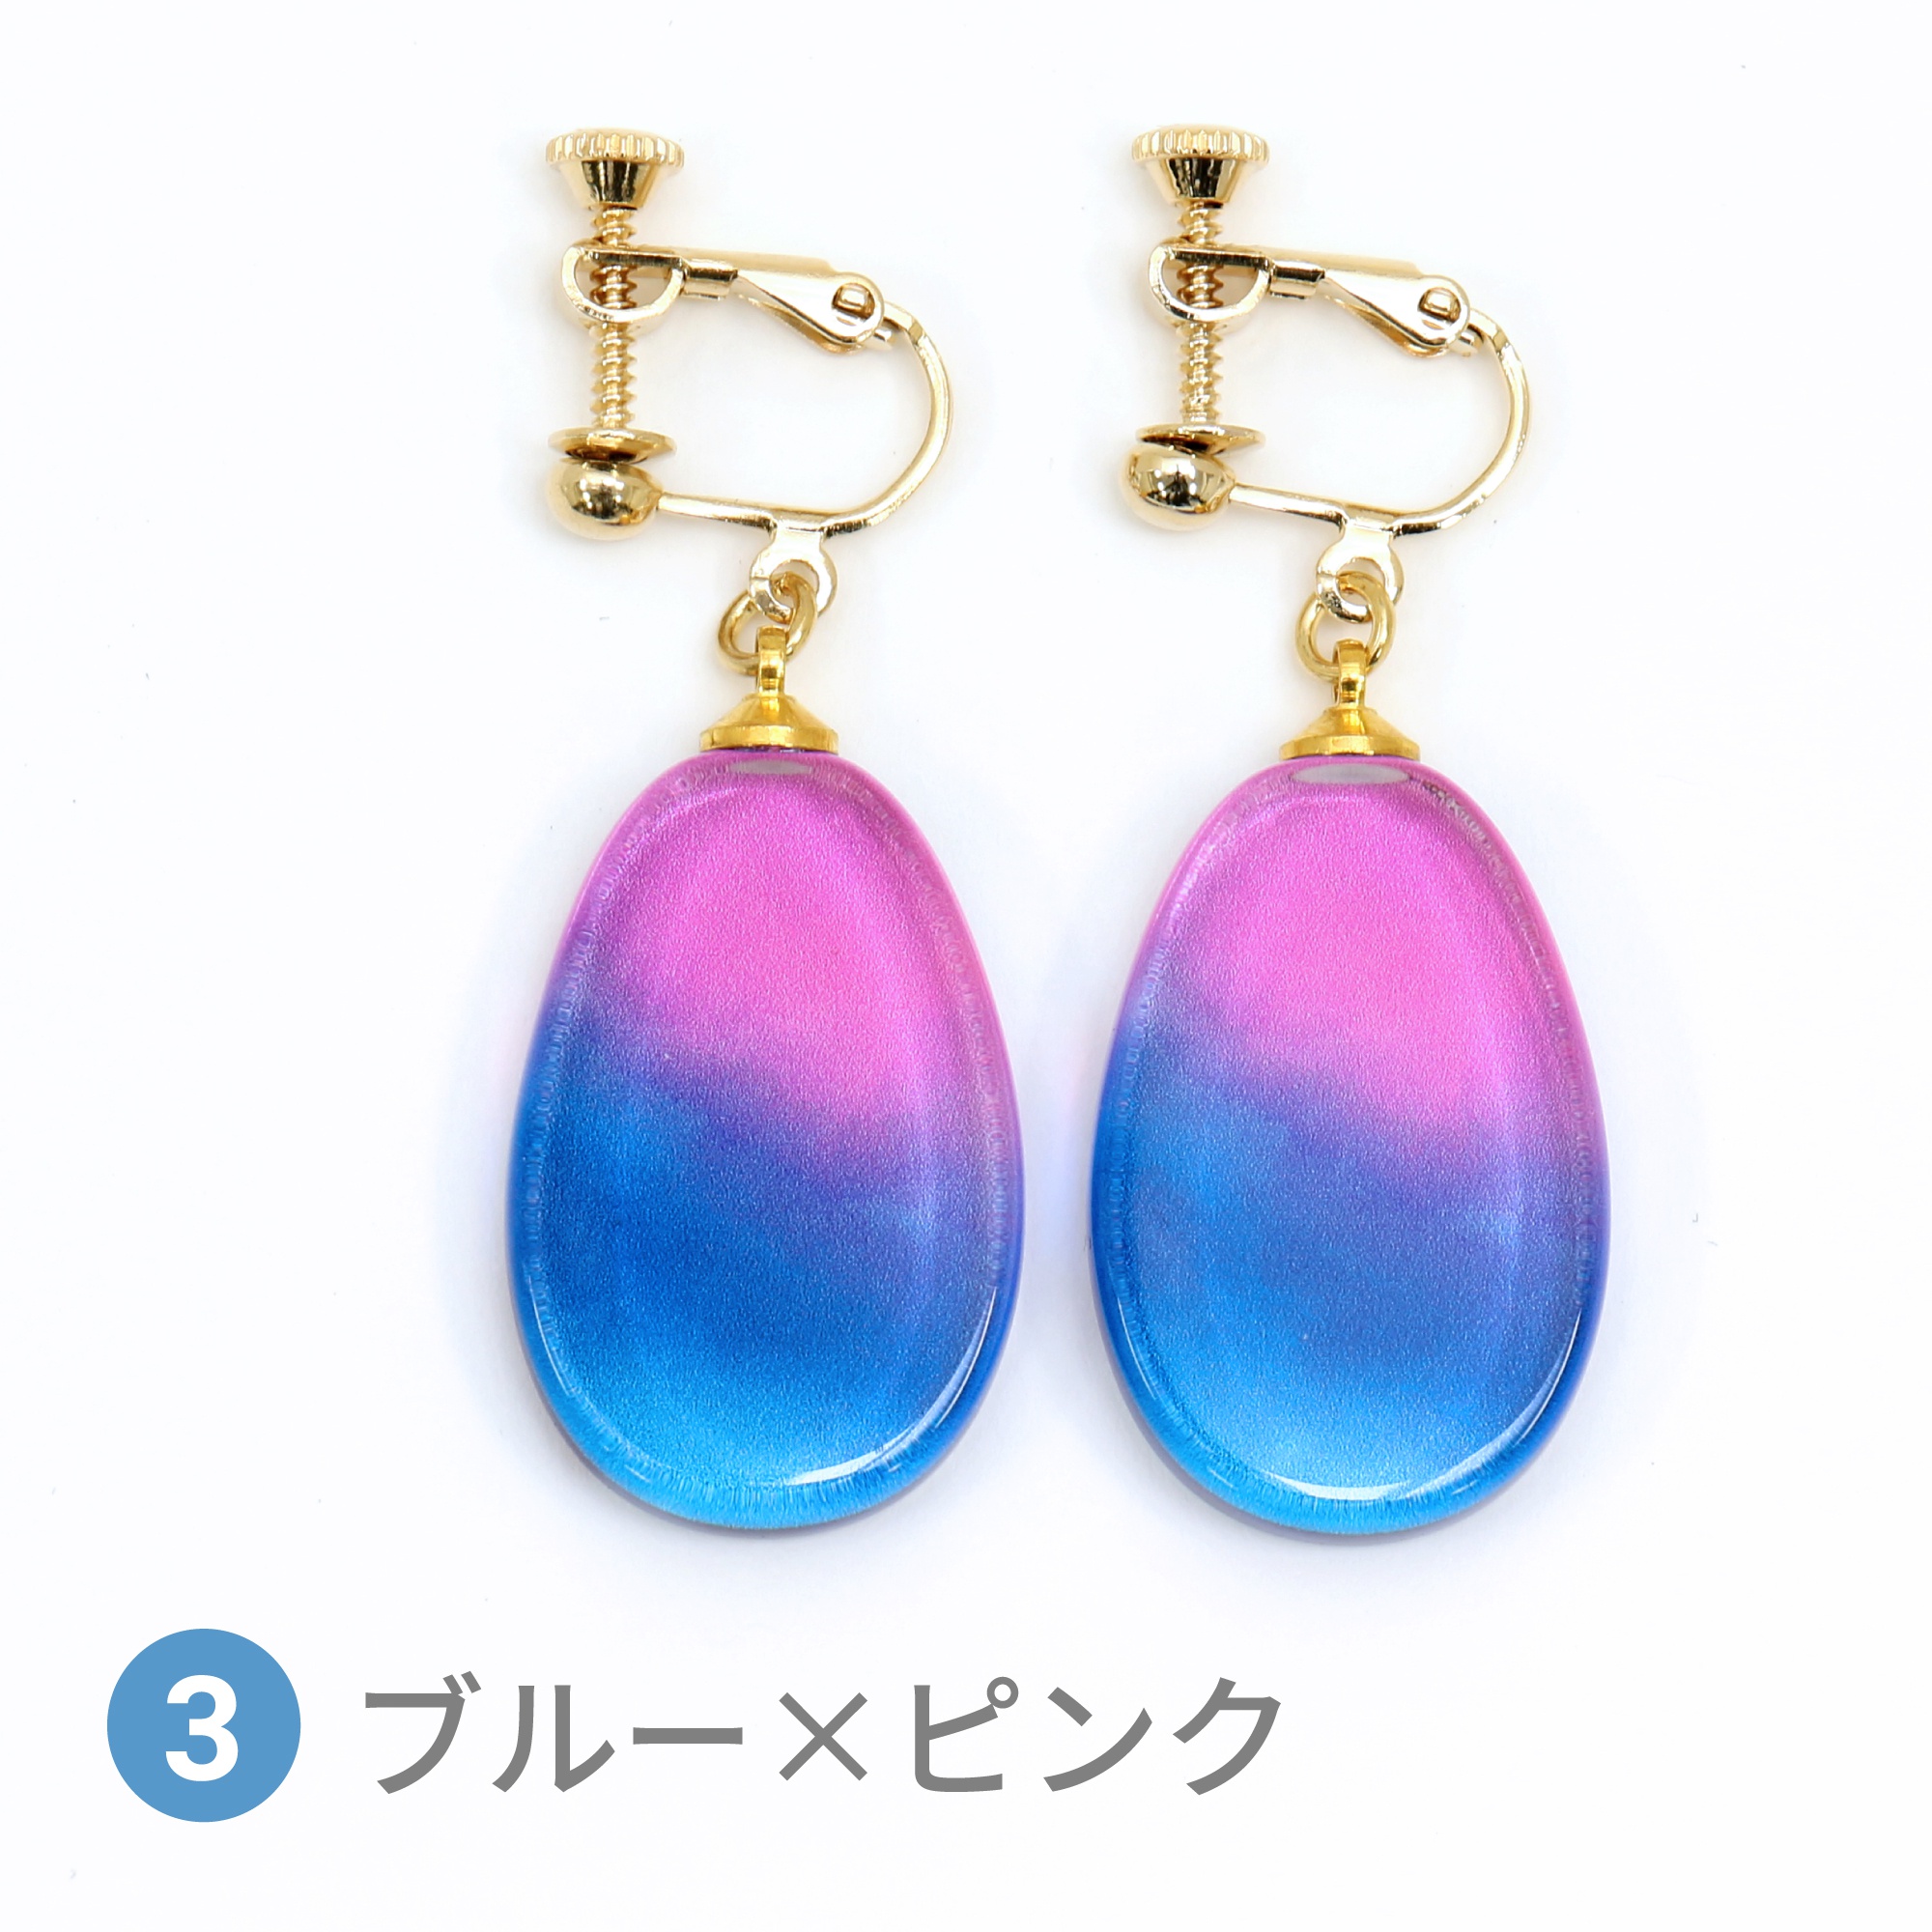 Glass accessories Earring AURORA blue&pink drop shape